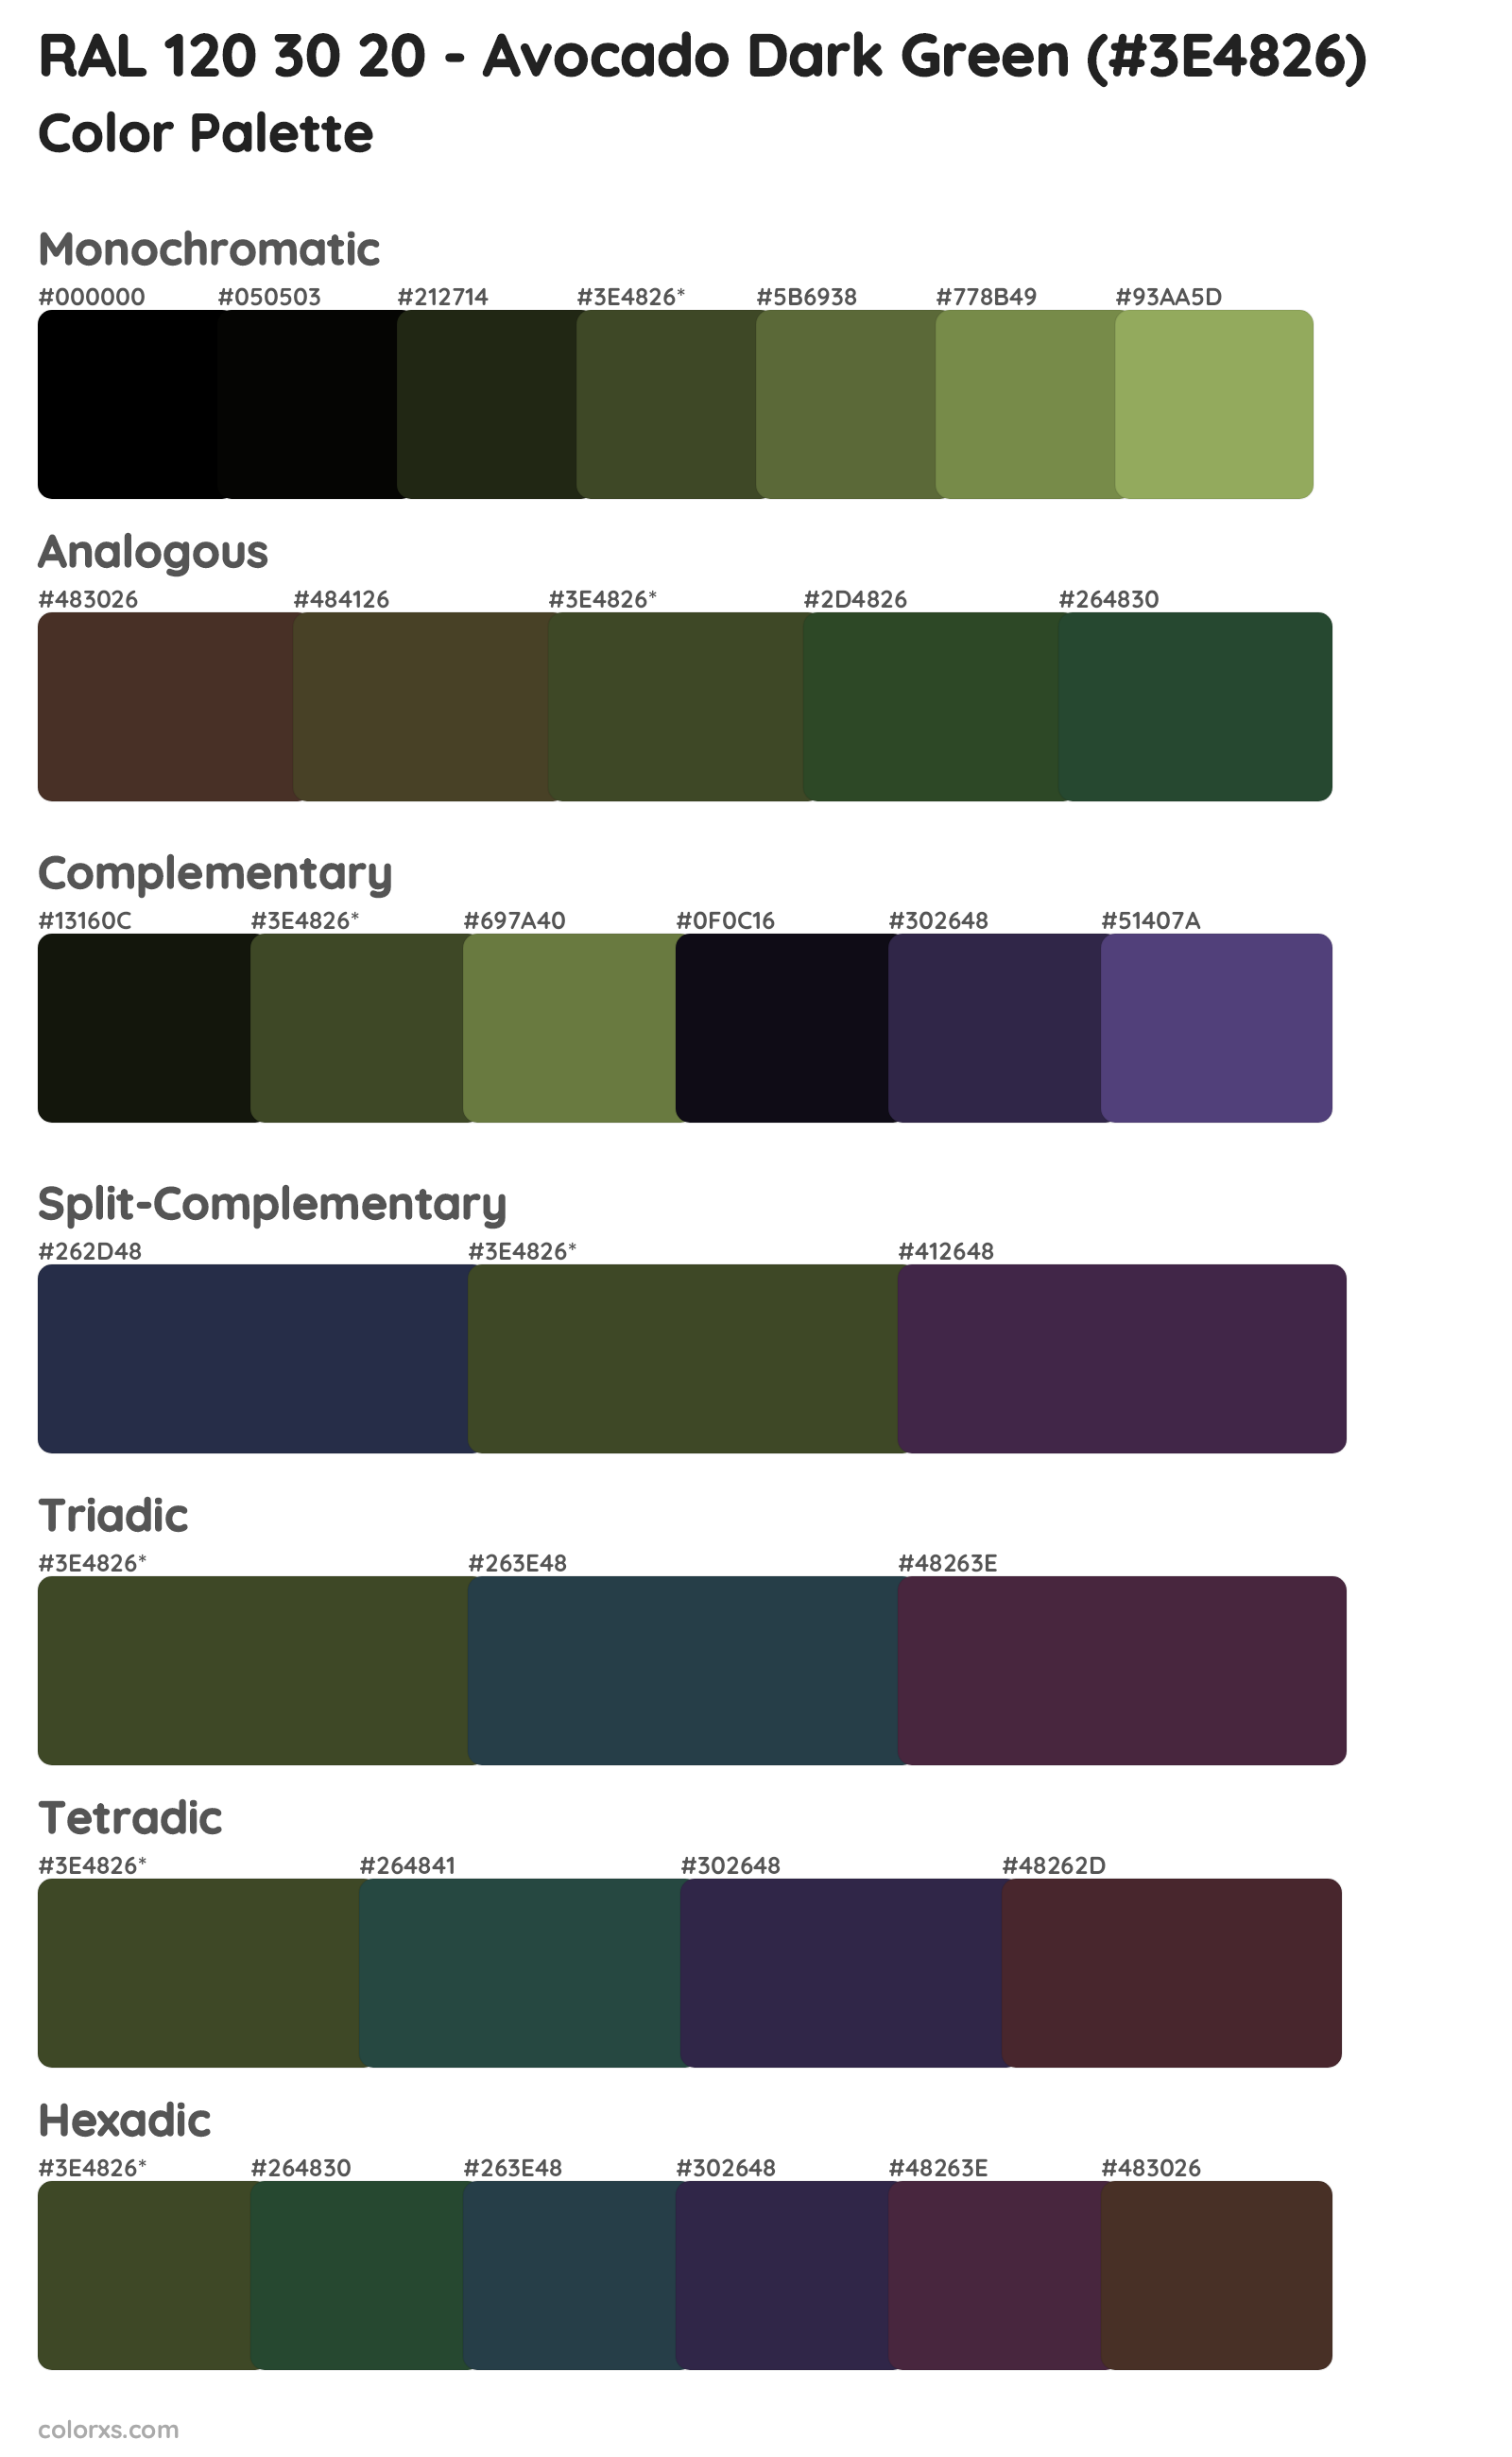 RAL 120 30 20 - Avocado Dark Green Color Scheme Palettes